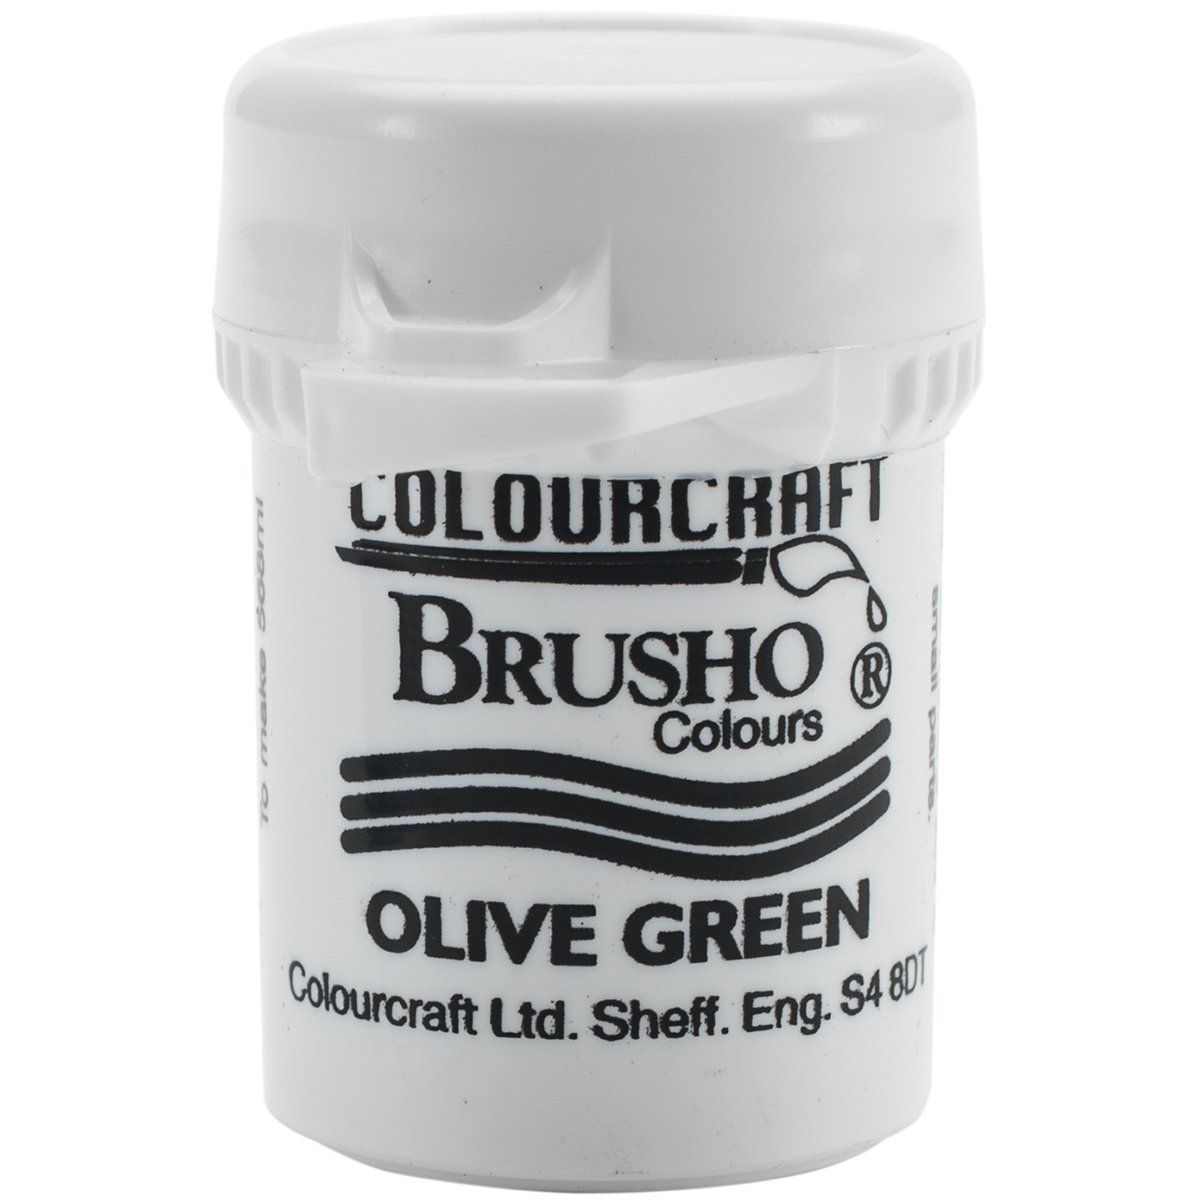 Brusho Crystal Colour - Olive Green 15 gm